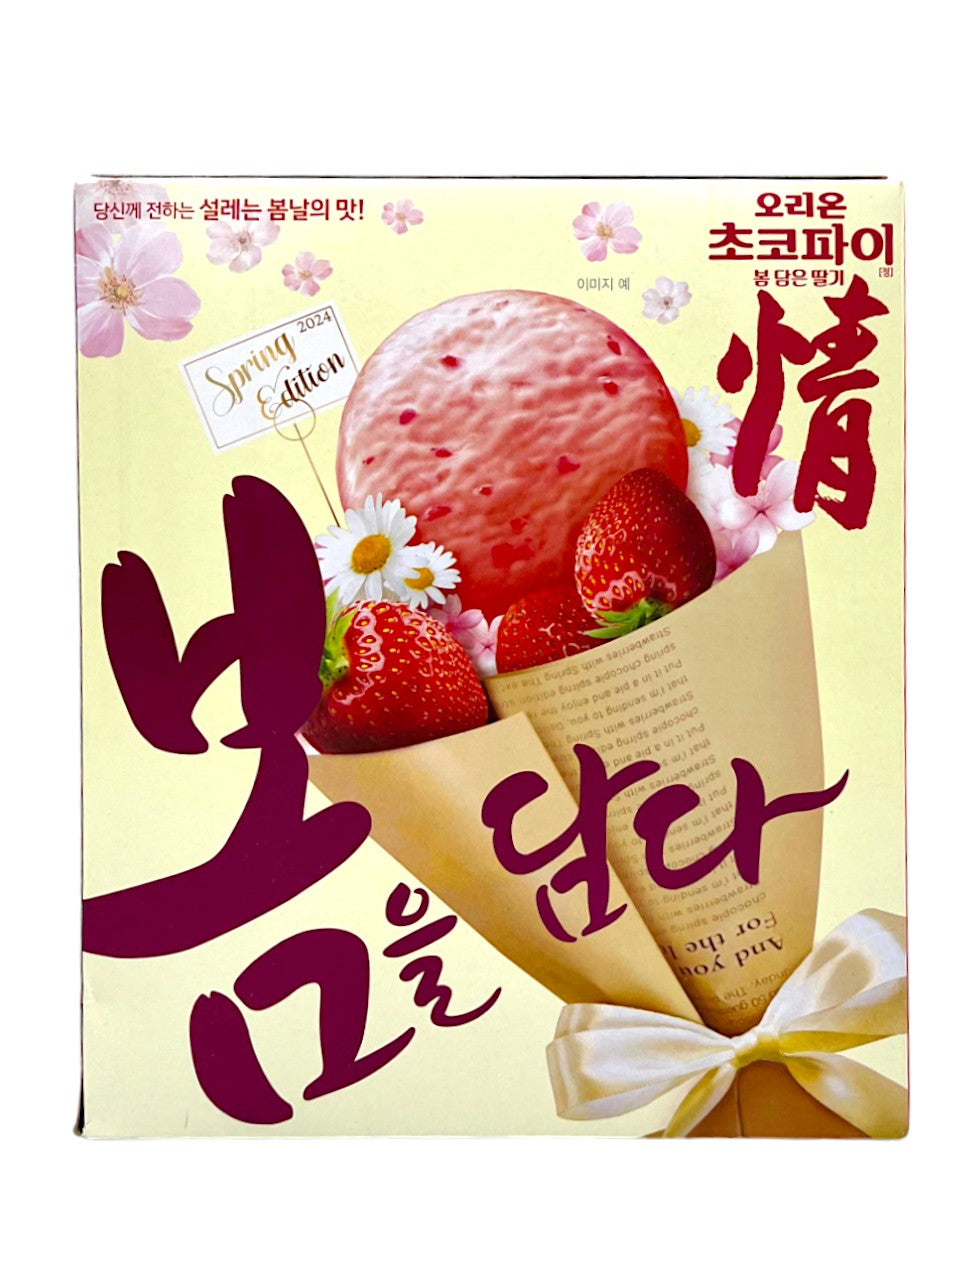 Orion Choco Pie Strawberry Spring Edition (Korea)